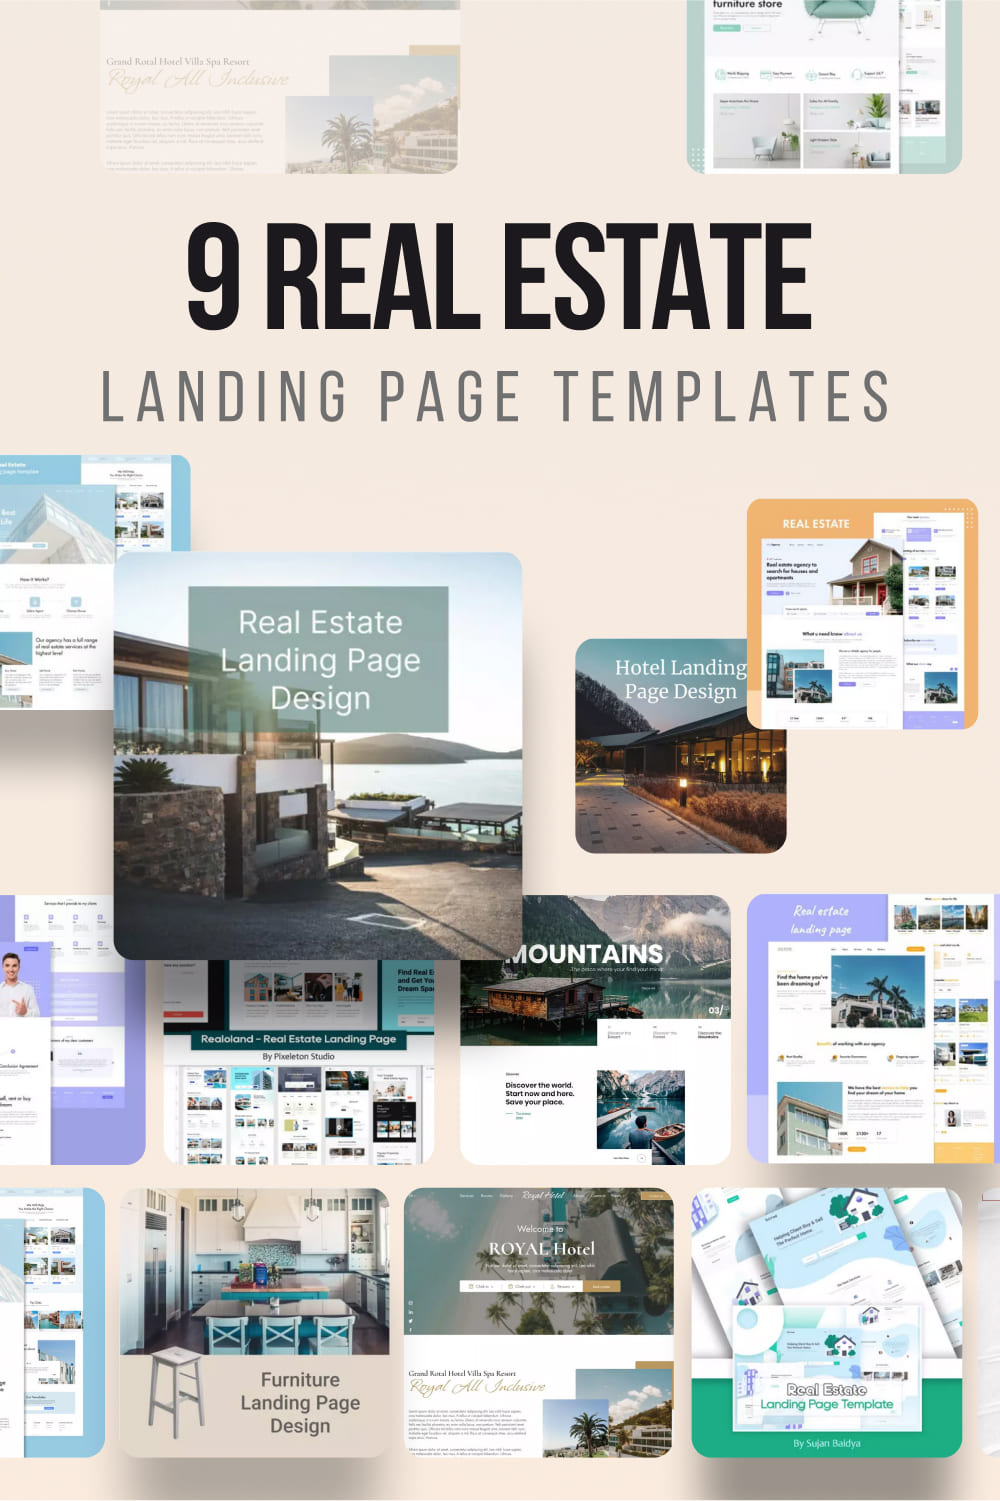 9 Real Estate Landing Page Templates Pinterest.